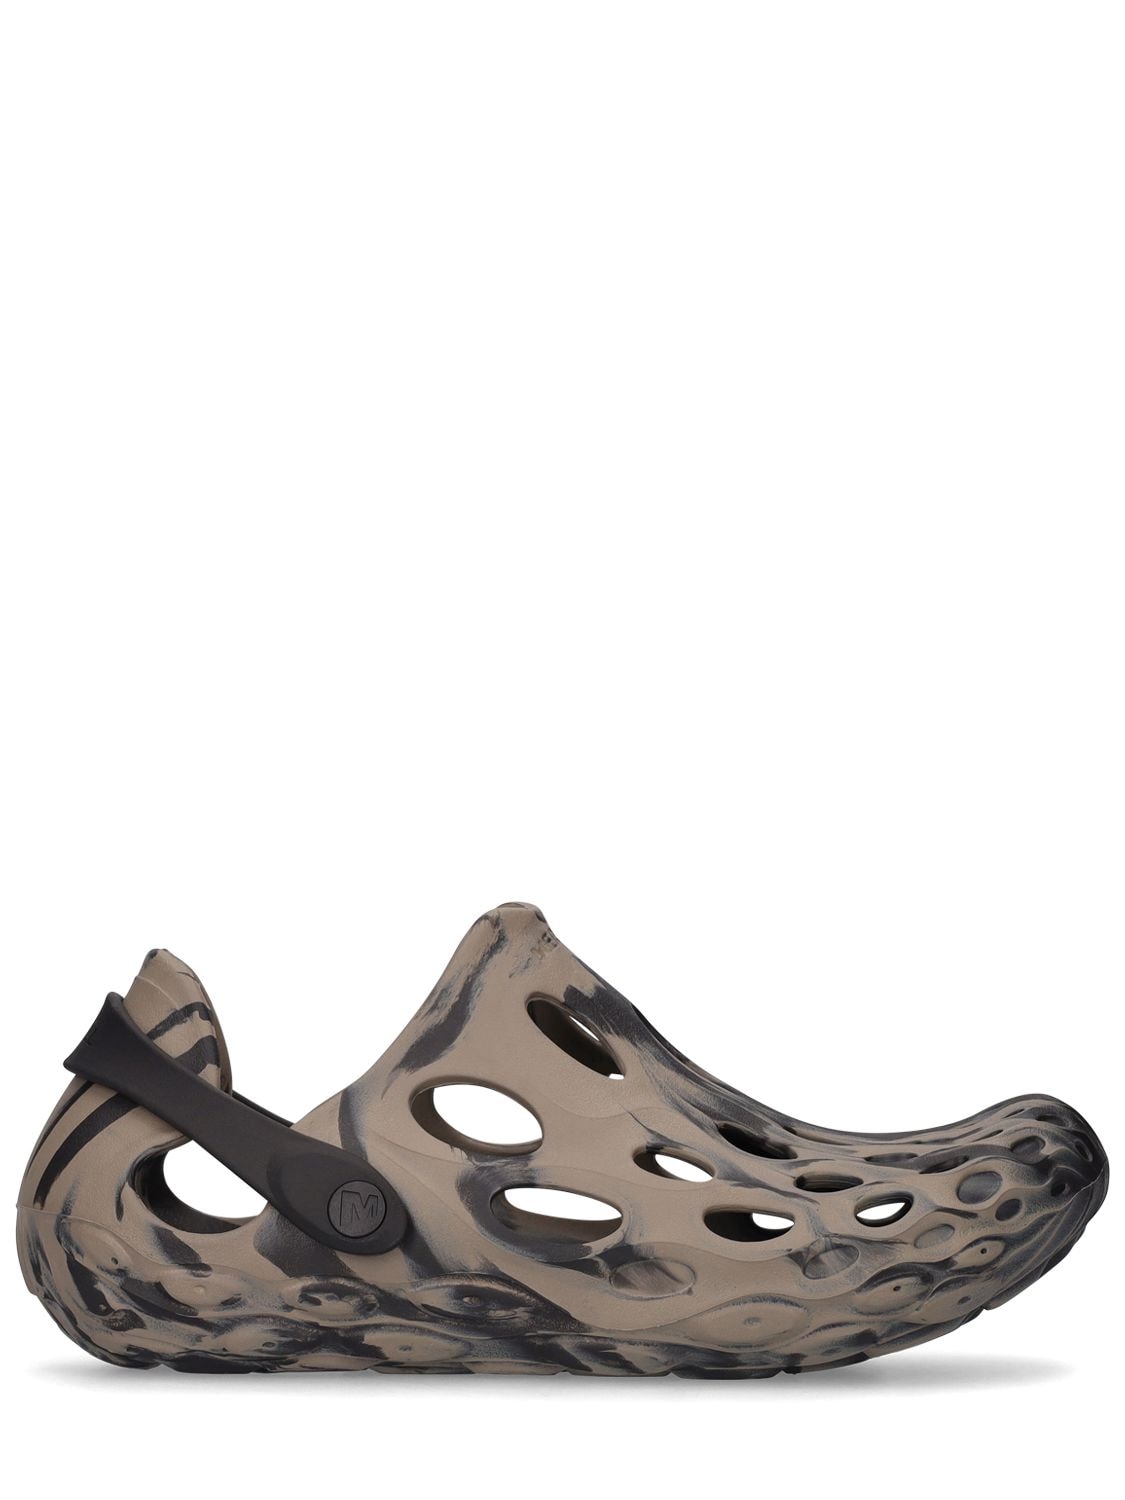 Merrell Hydro Moc Bloom Sandals In Black,grey | ModeSens